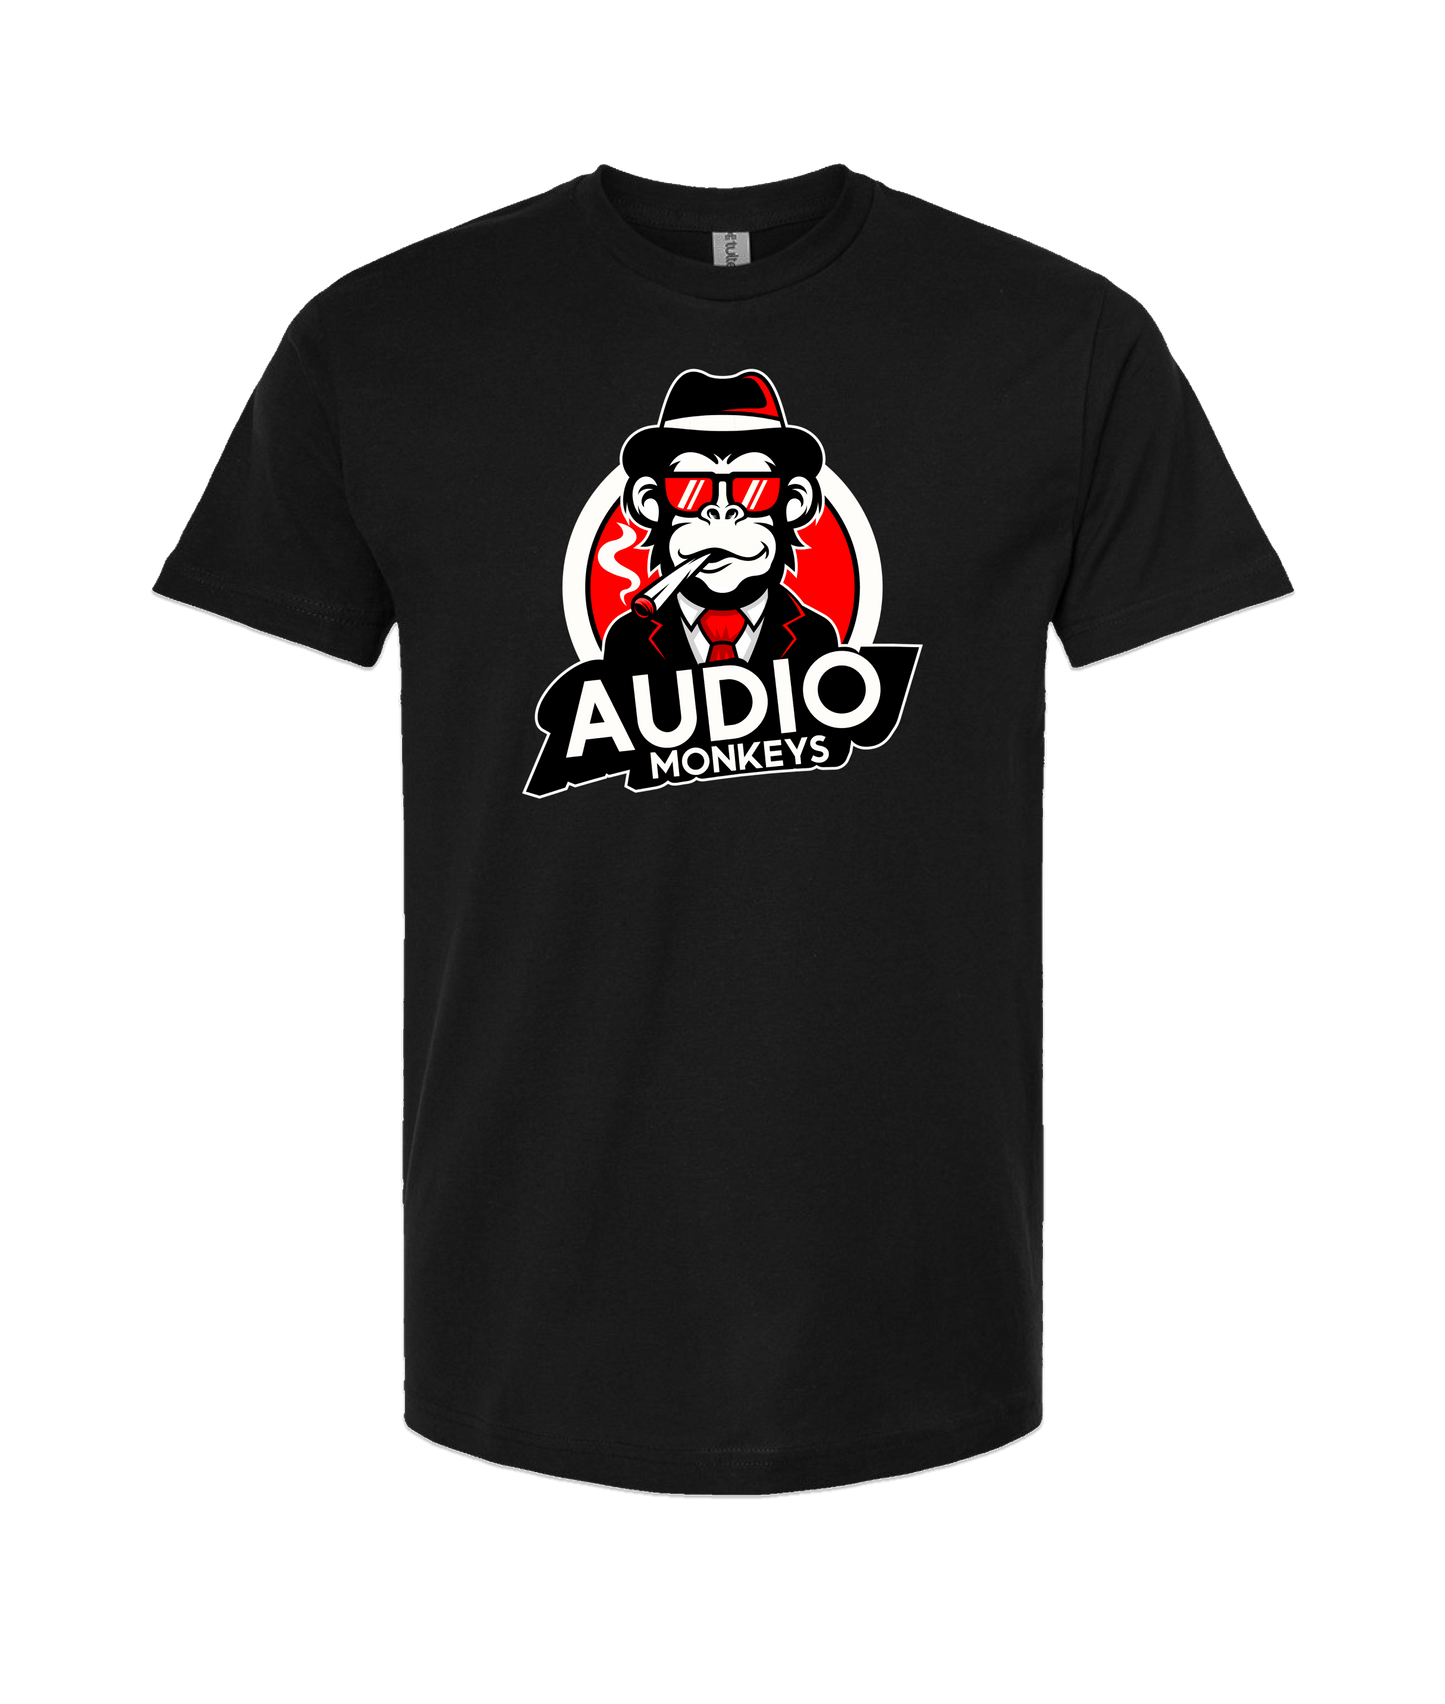 AudioMonkeys - Party Monkey - Black T Shirt